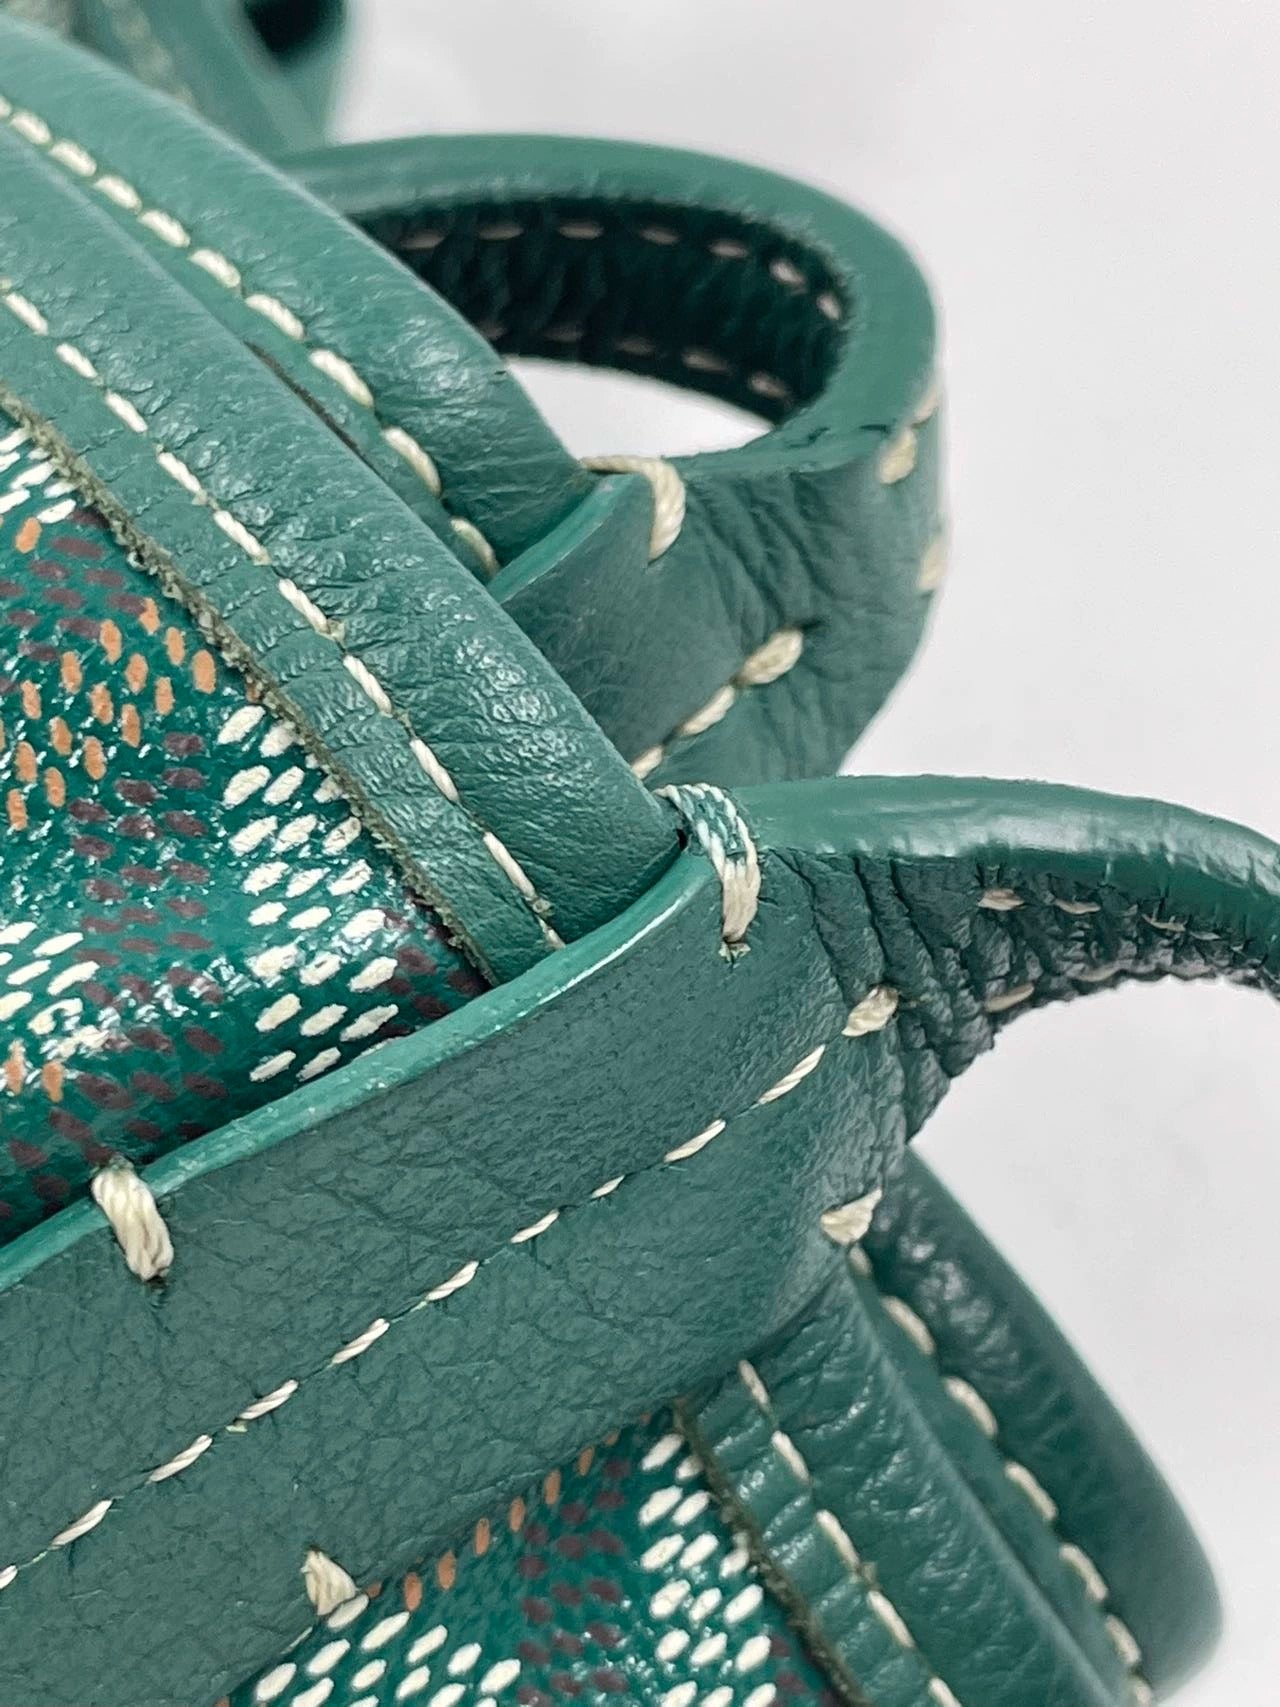 Anjou leather handbag Goyard Green in Leather - 33379276